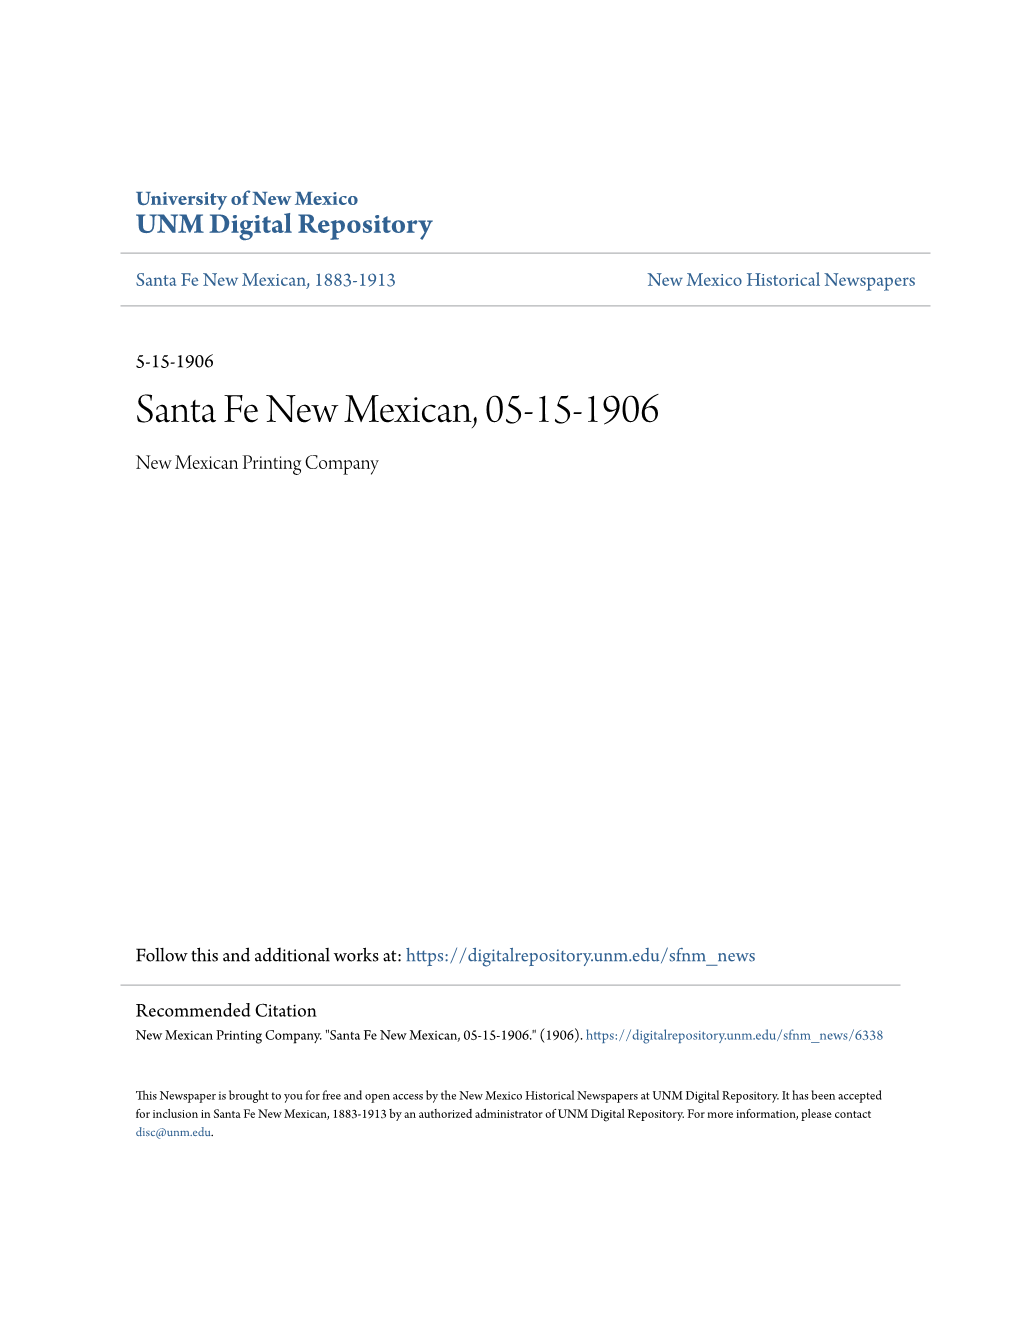 Santa Fe New Mexican, 05-15-1906 New Mexican Printing Company